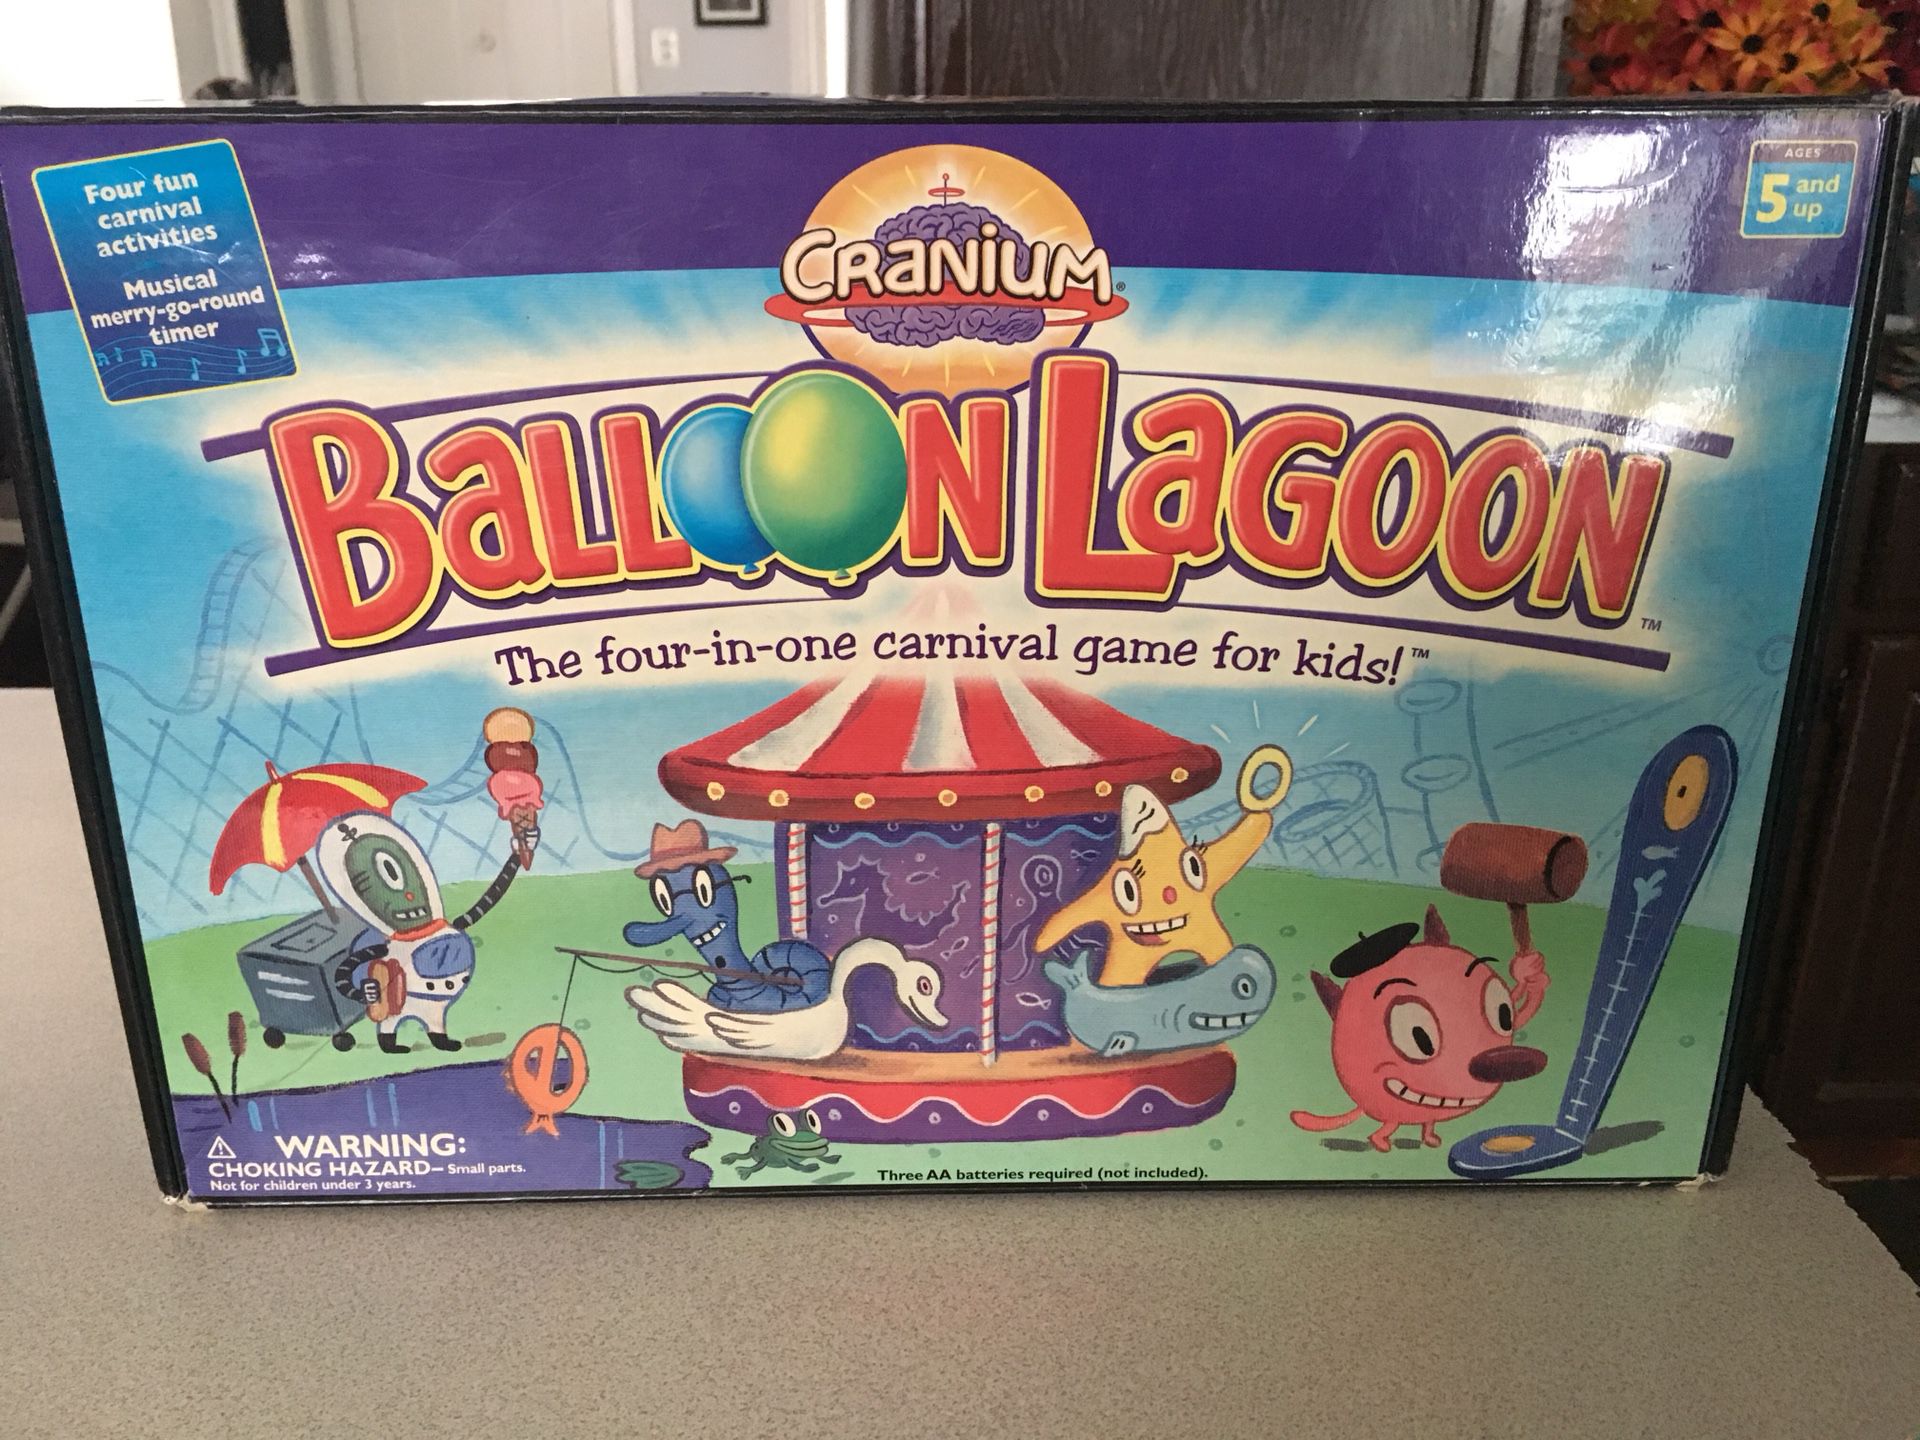 Cranium Balloon Lagoon Game